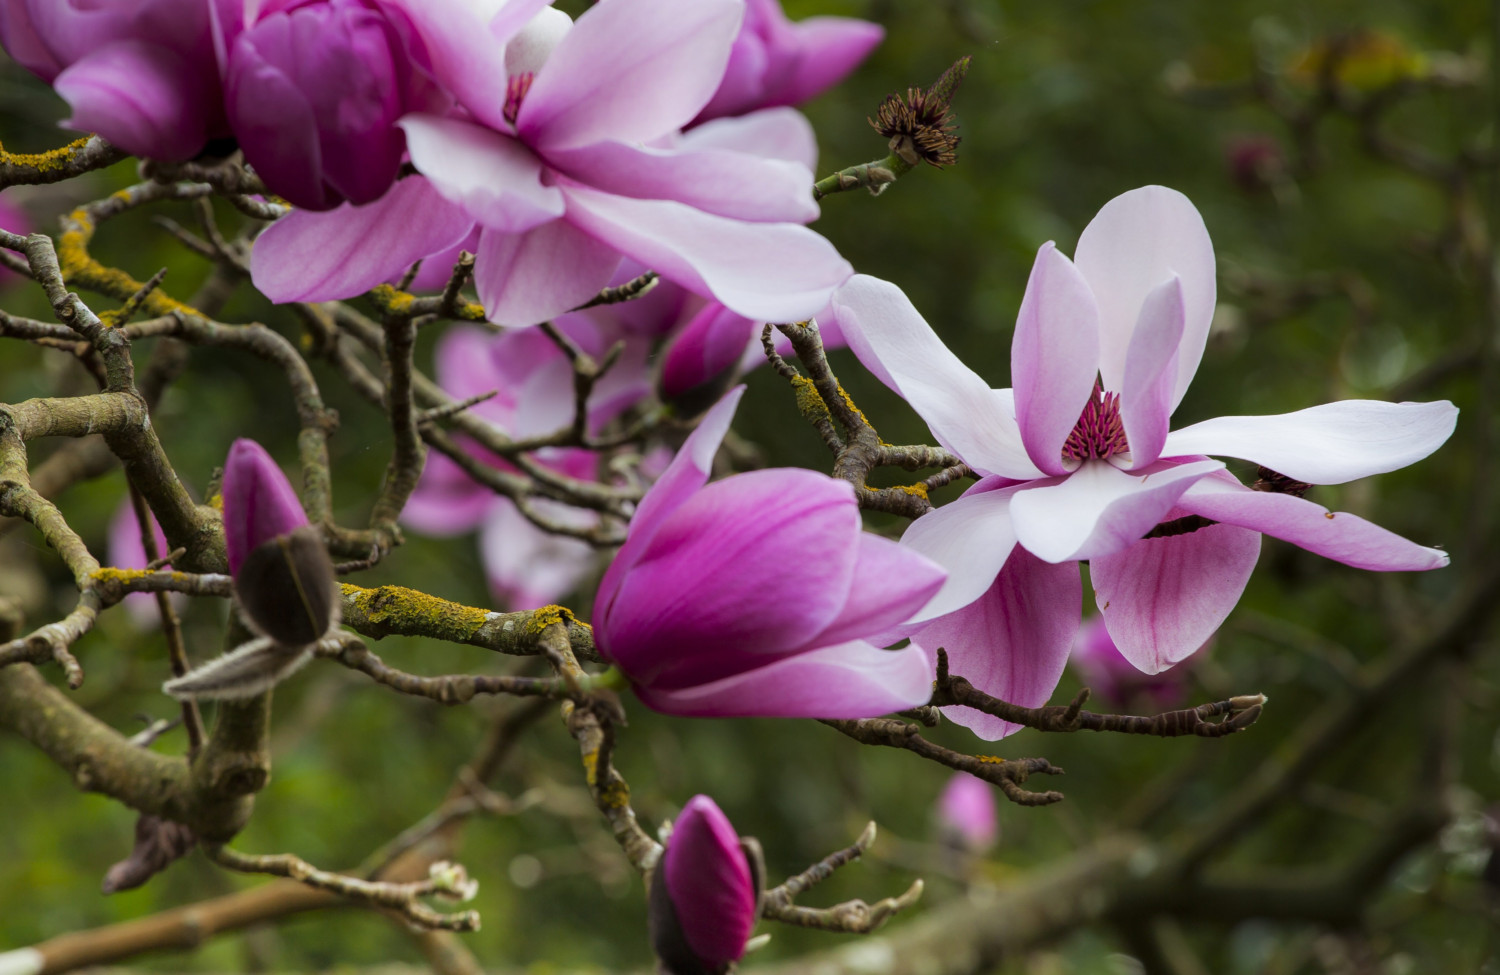 Sprenger magnolia blossoms, a pink flowering winter magnolia